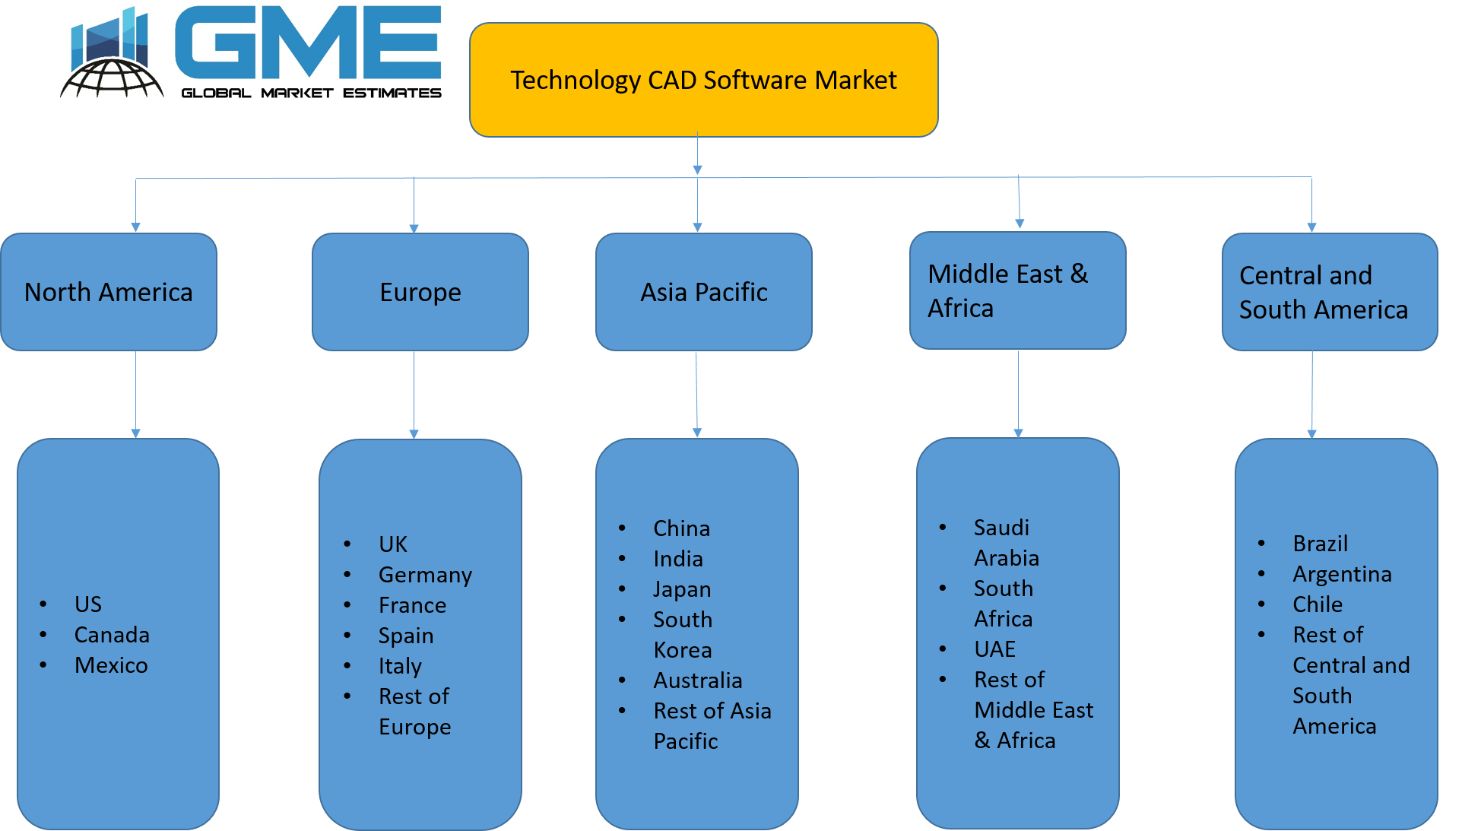 Technology CAD Software Market - Regional Analysis